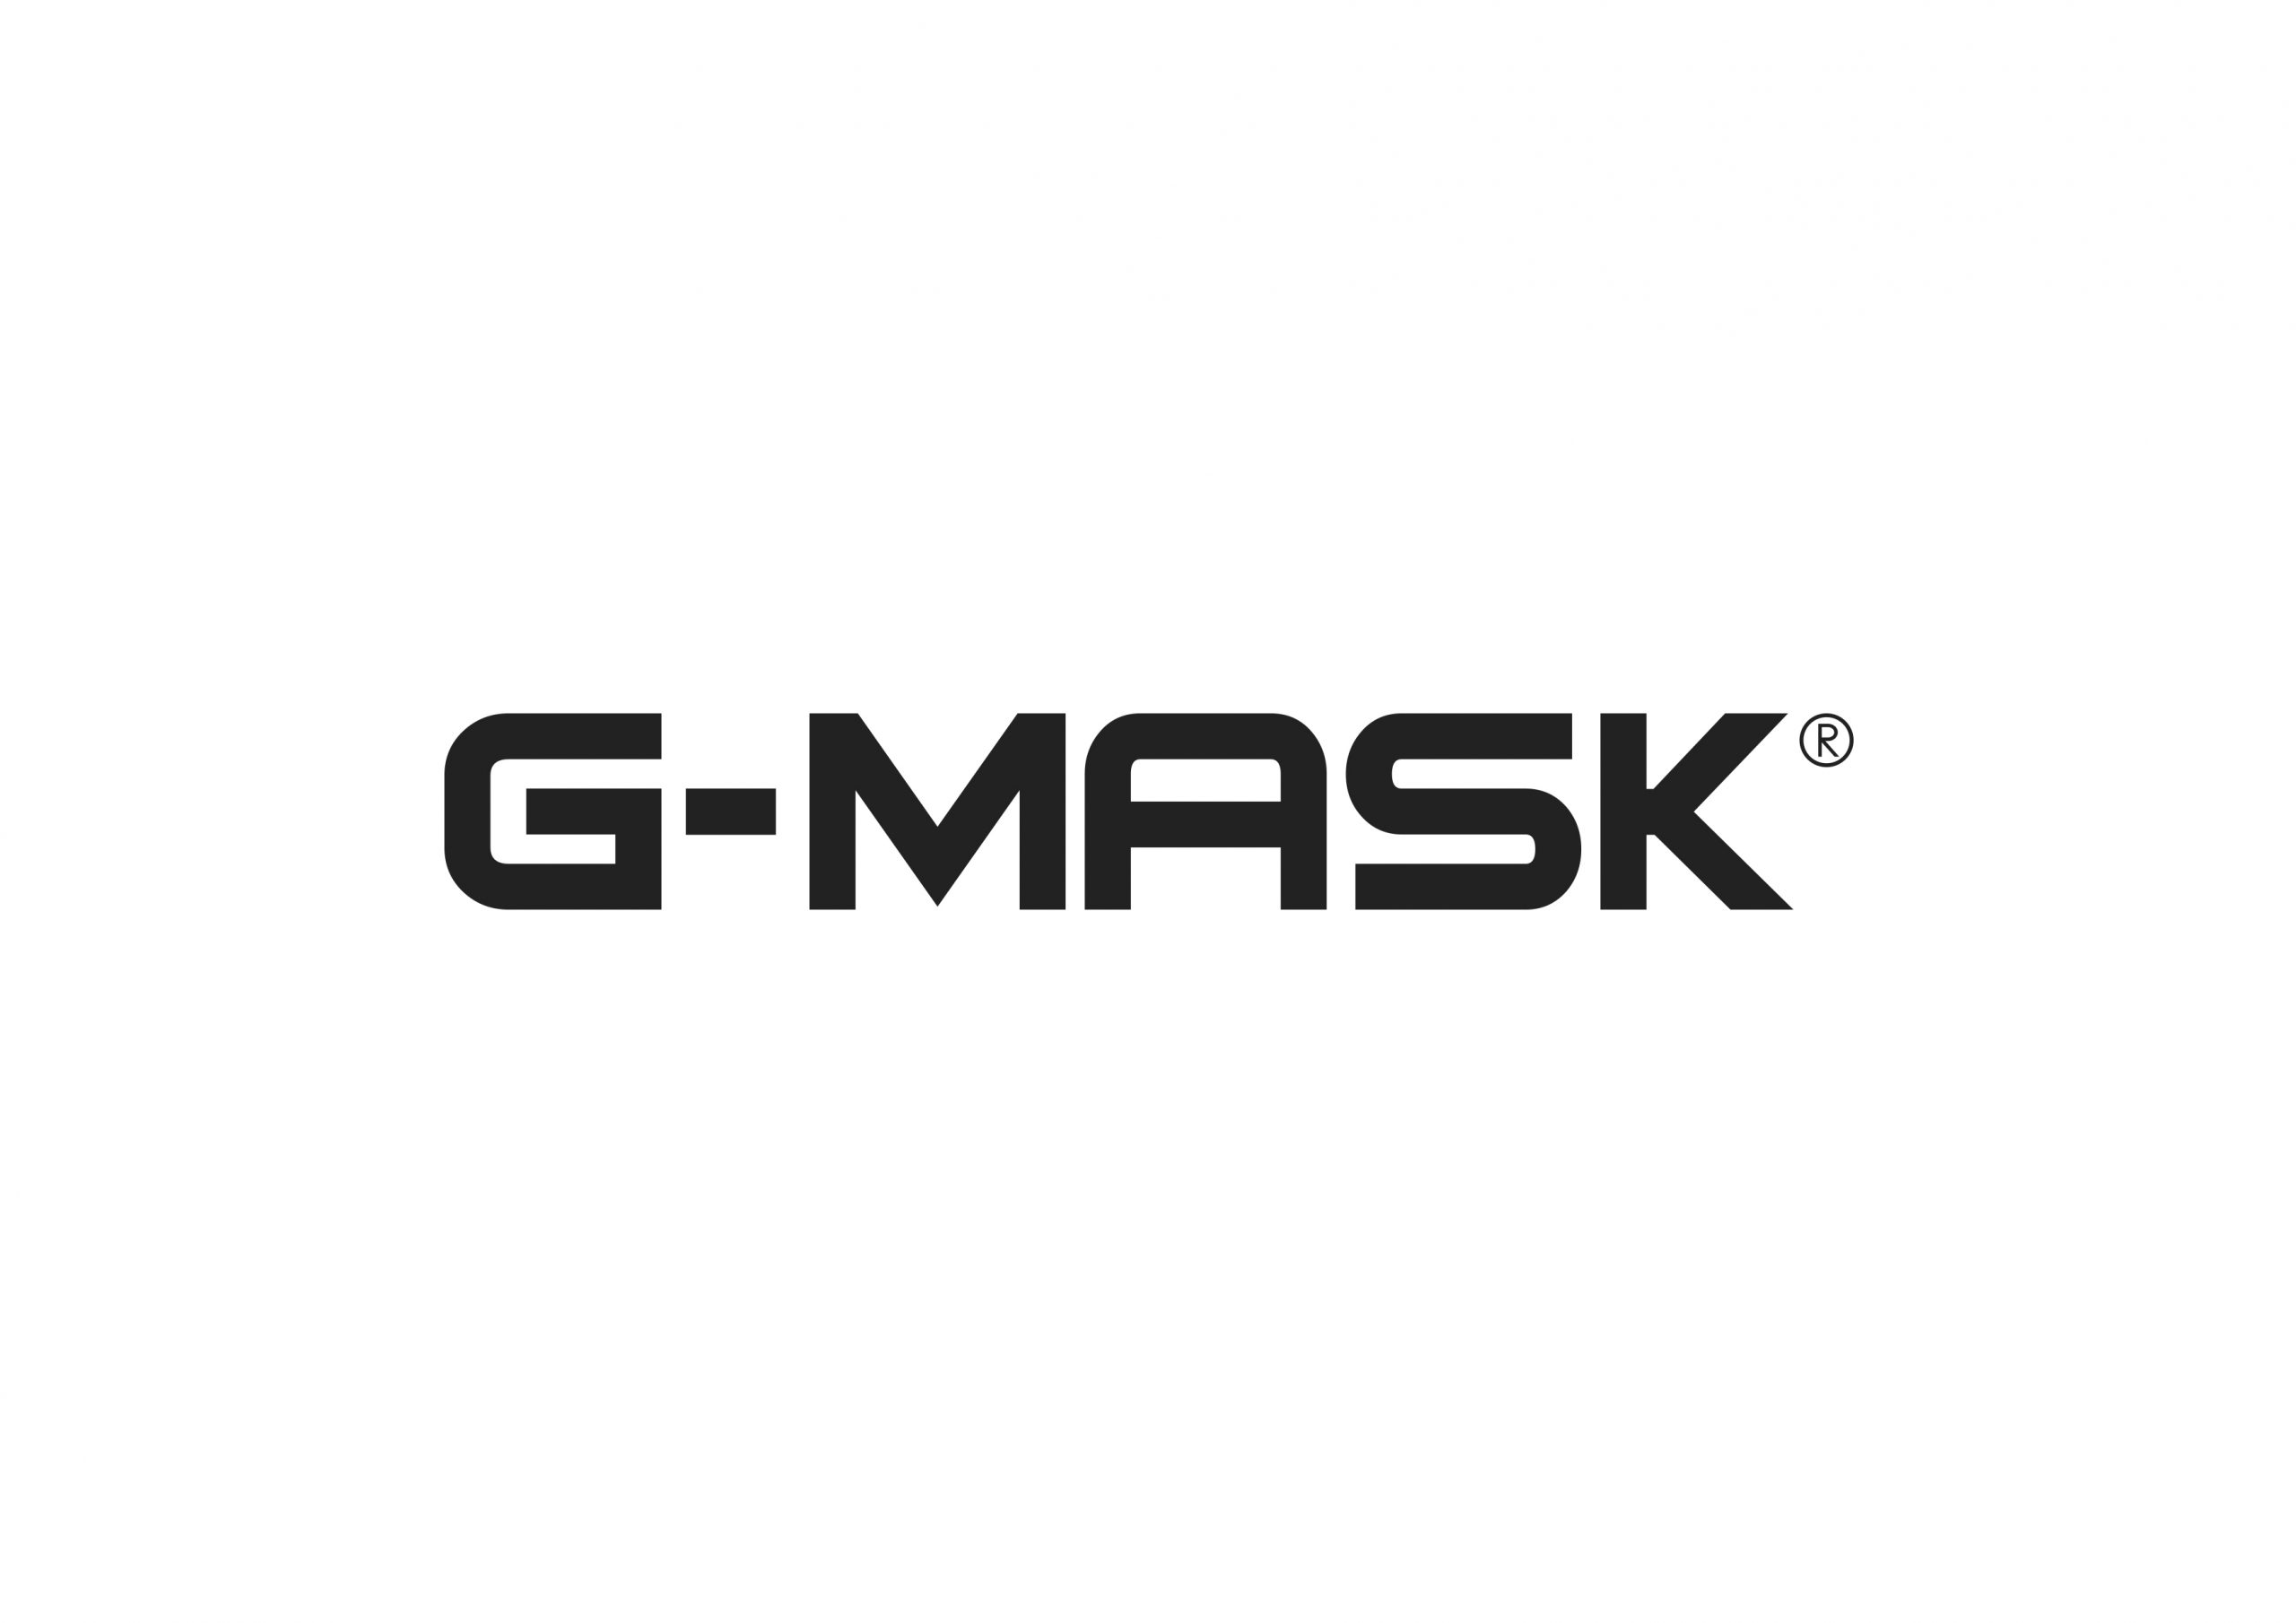 logo G-MASK. Marca registrada de mascarillas higiénicas